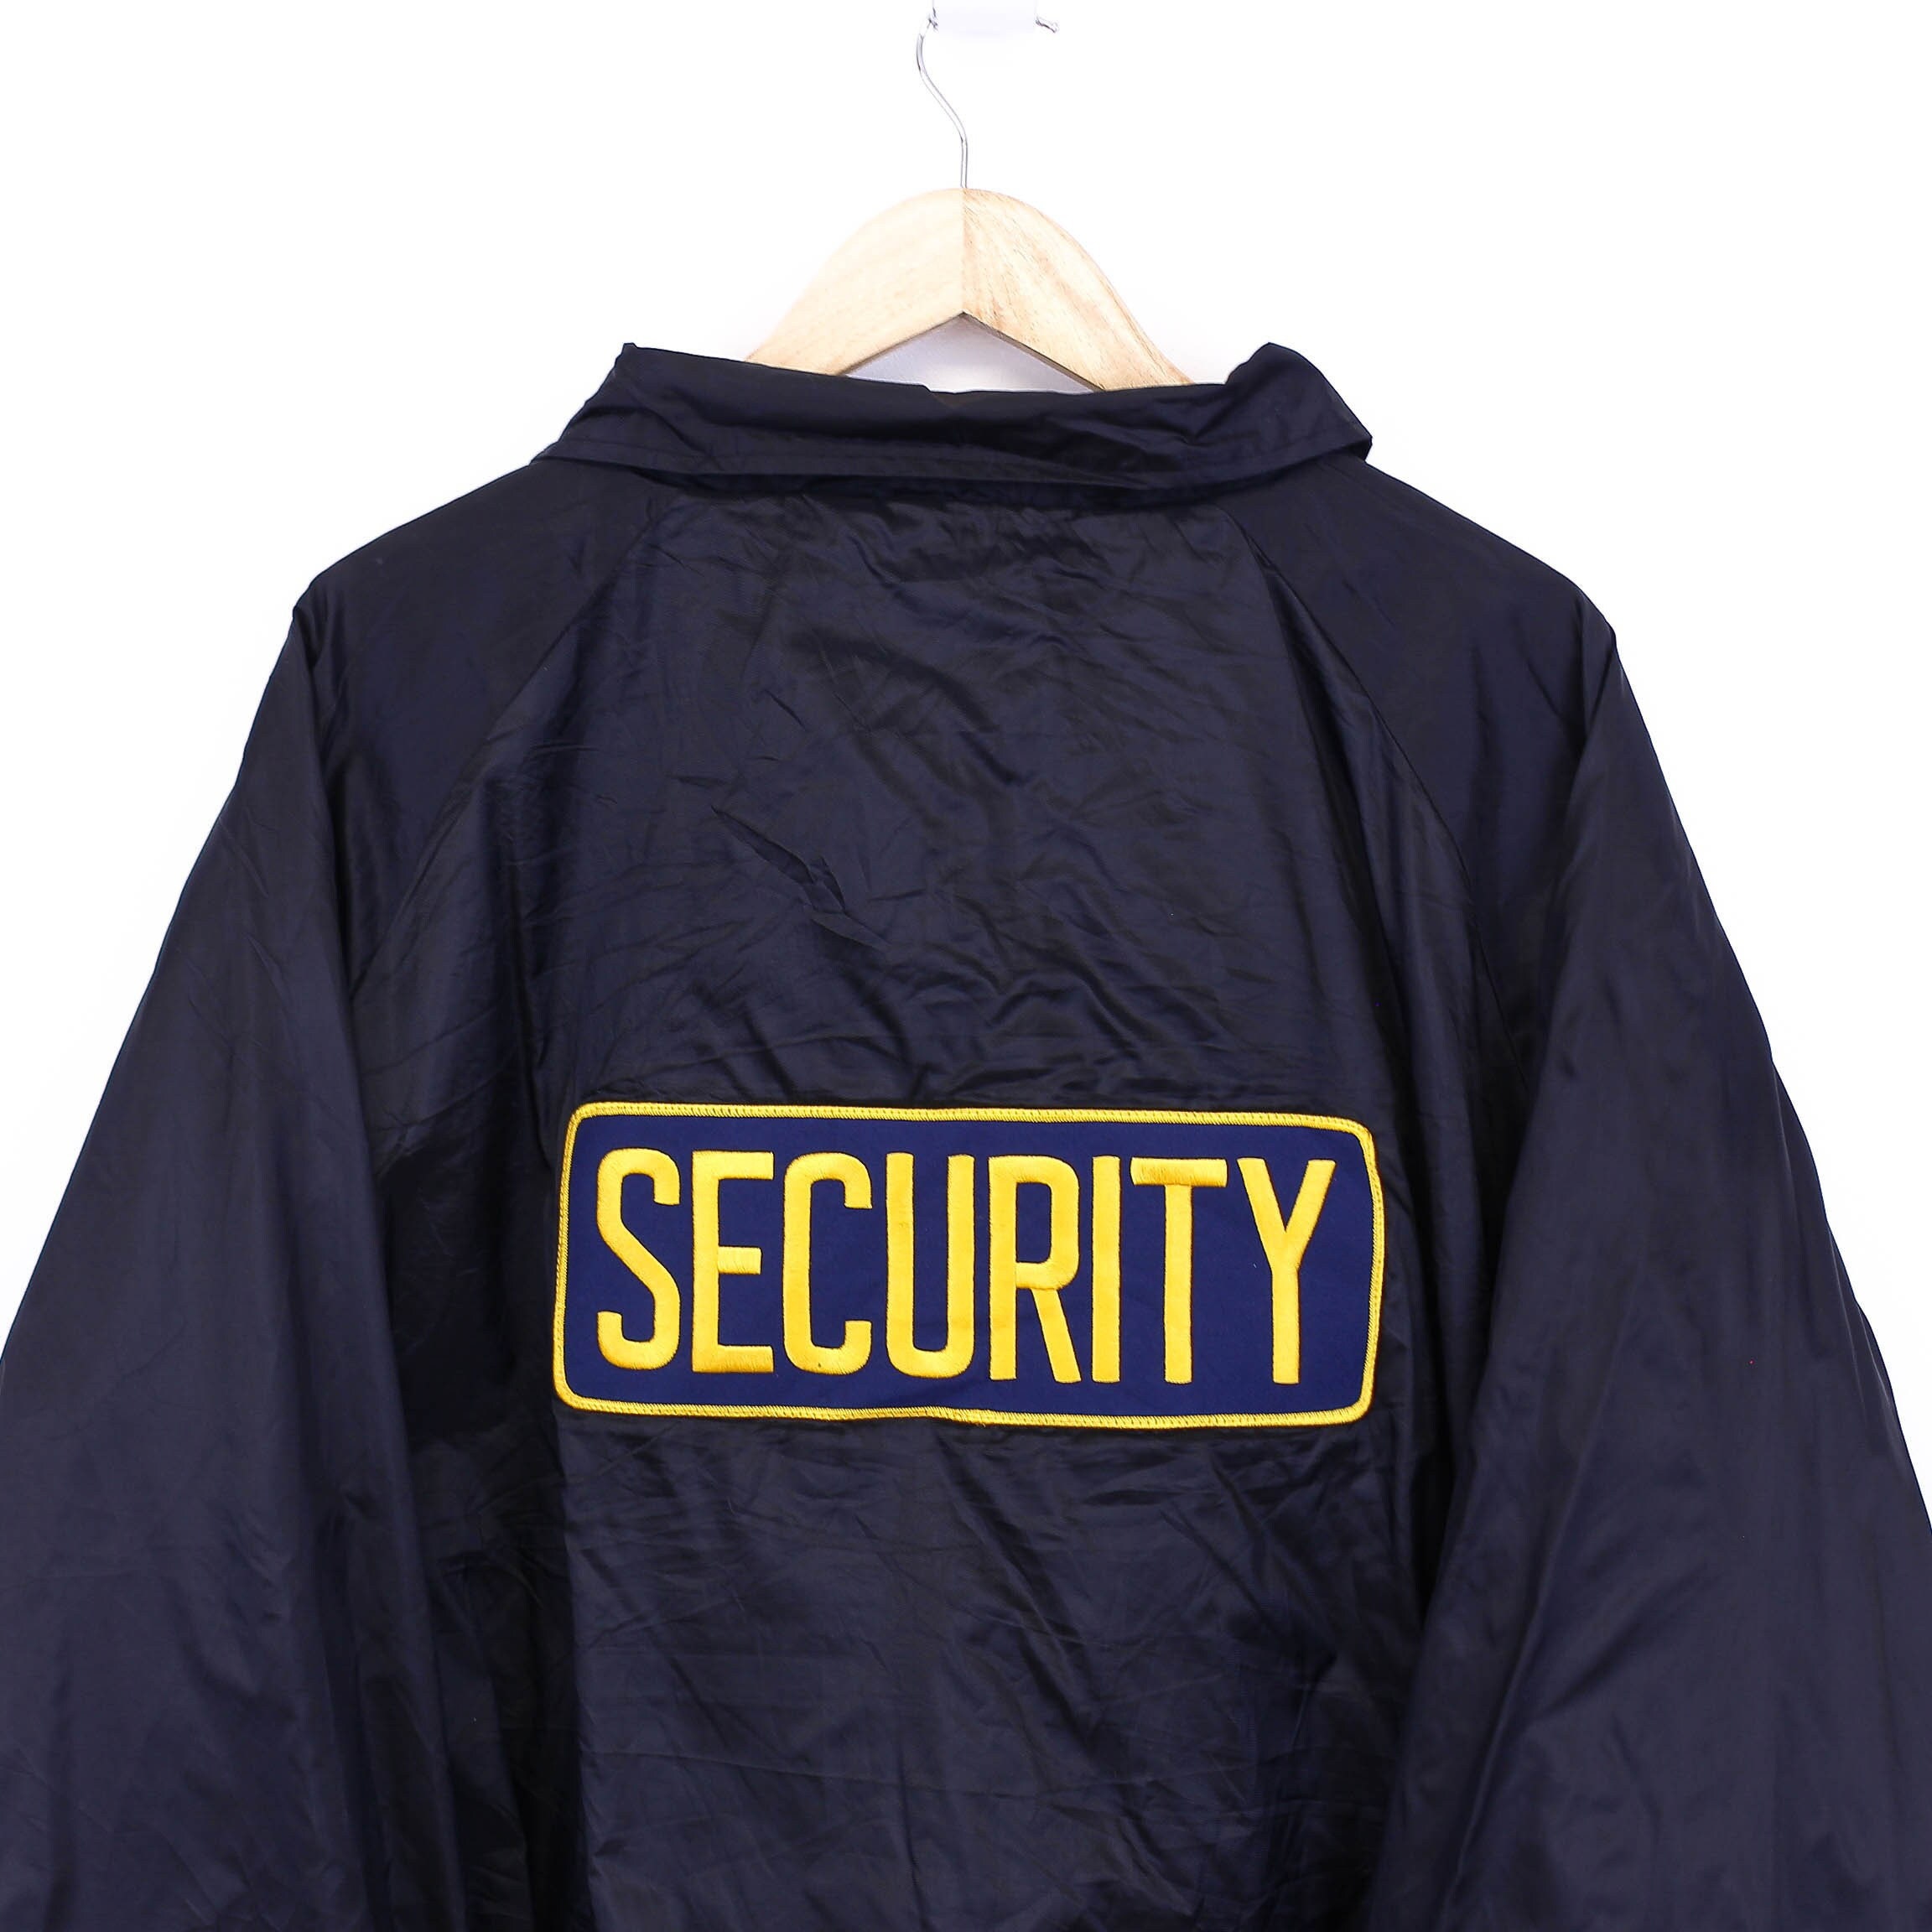 80svintage security police jacket